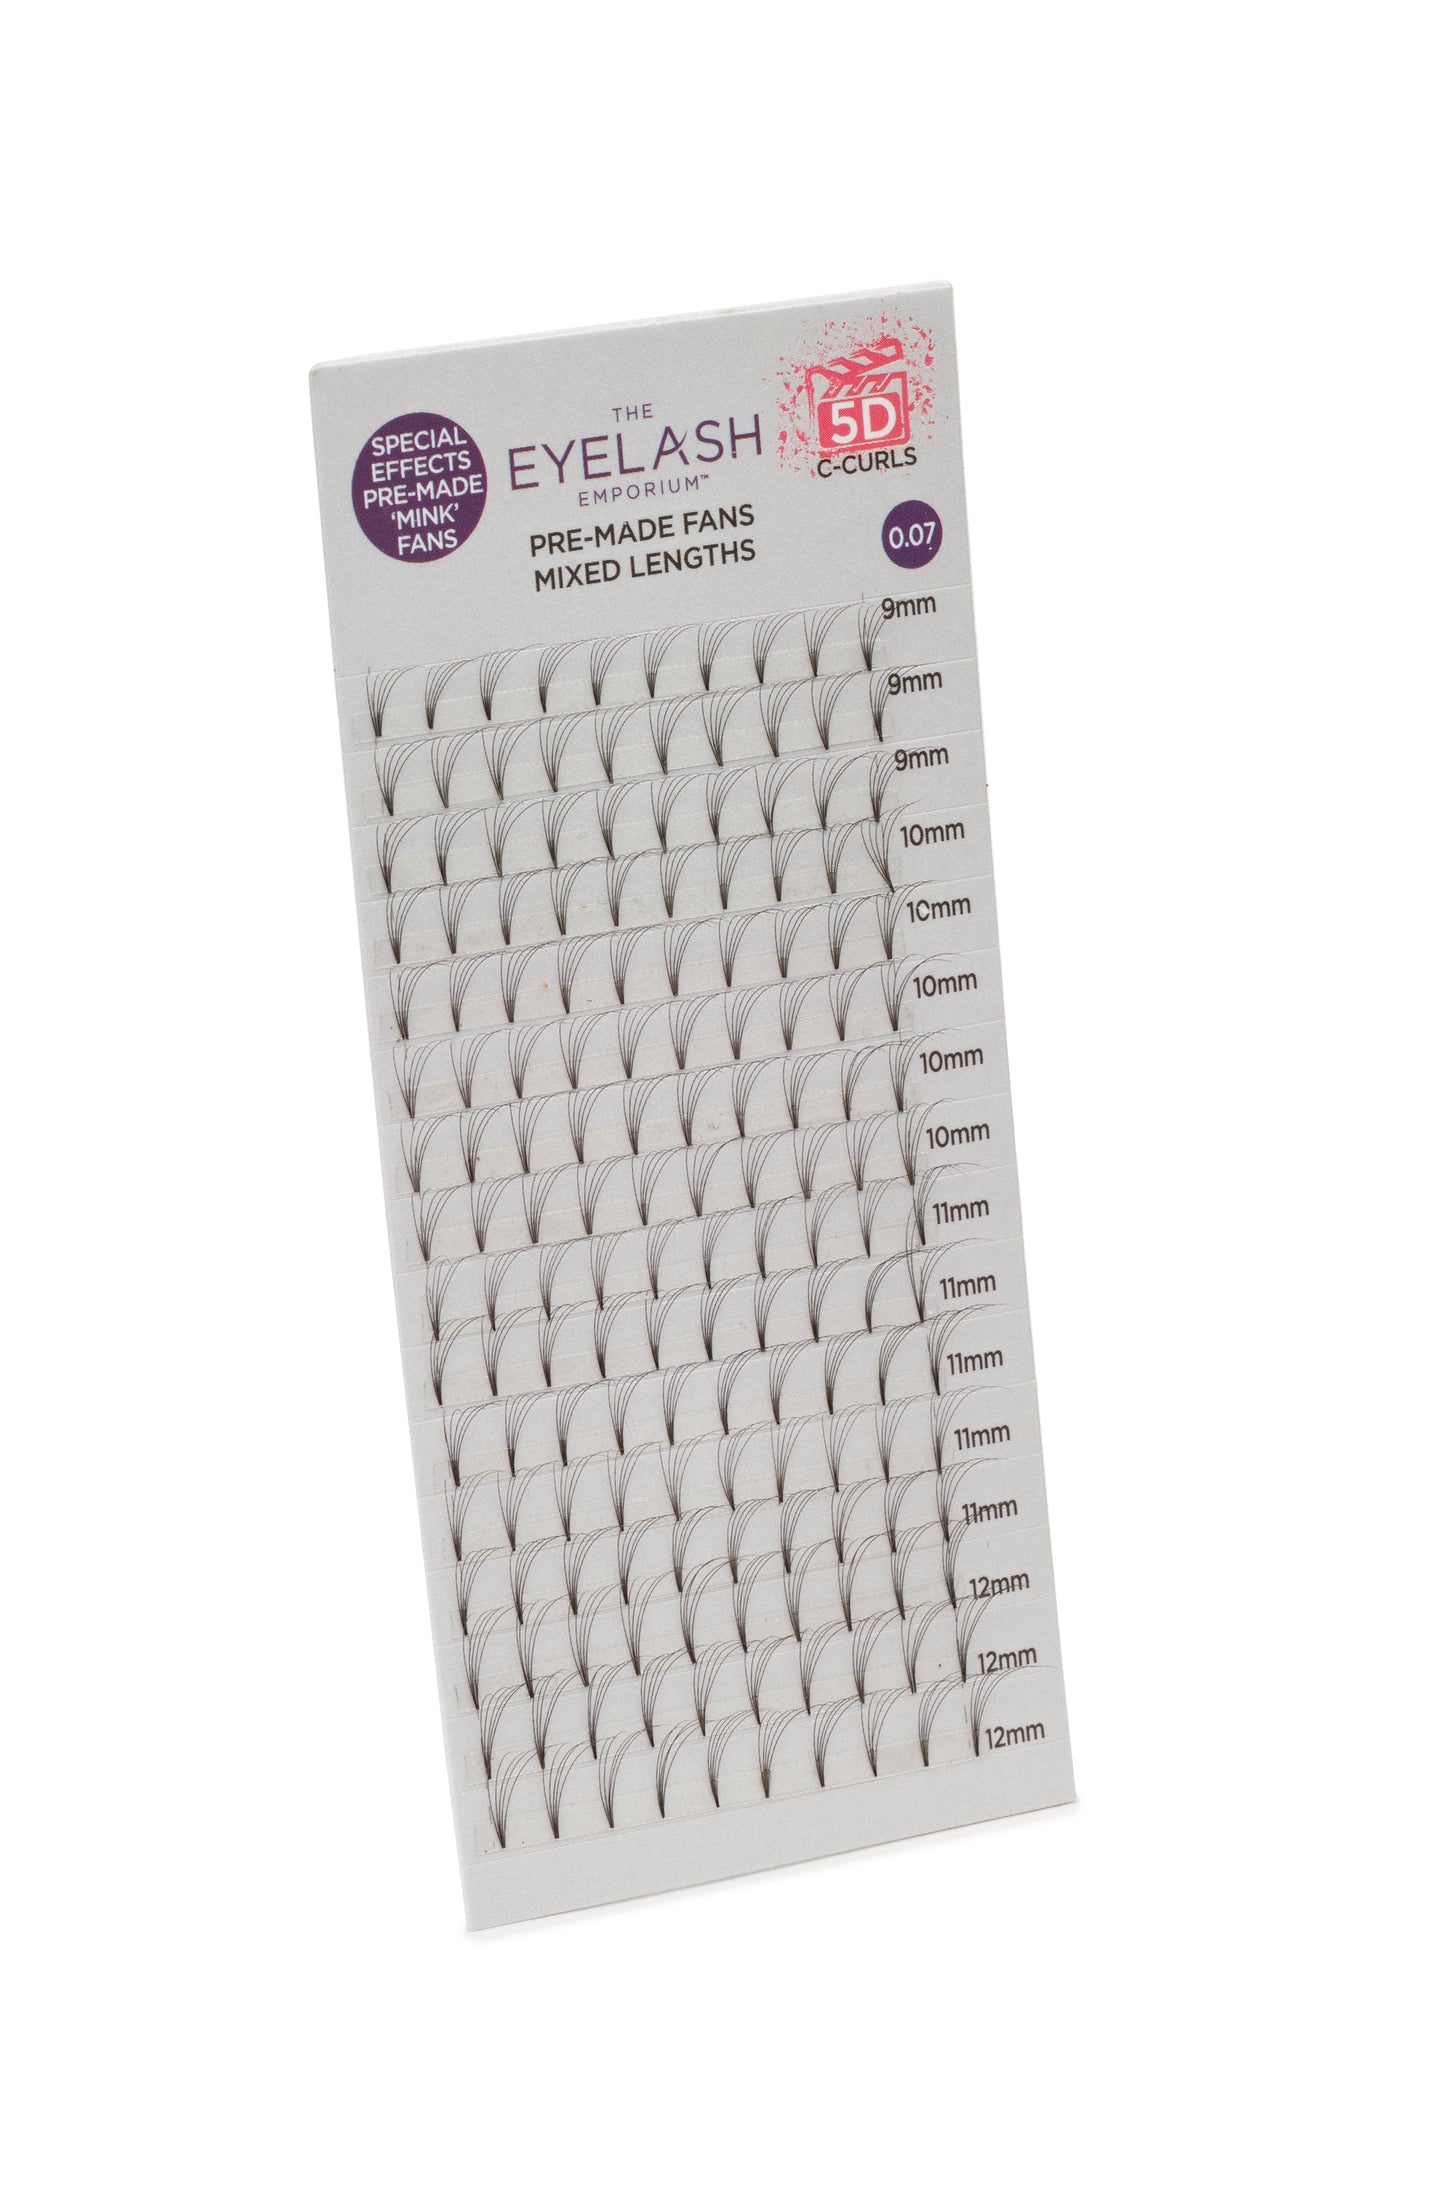 The Eyelash Emporium CCurl premade fan lashes